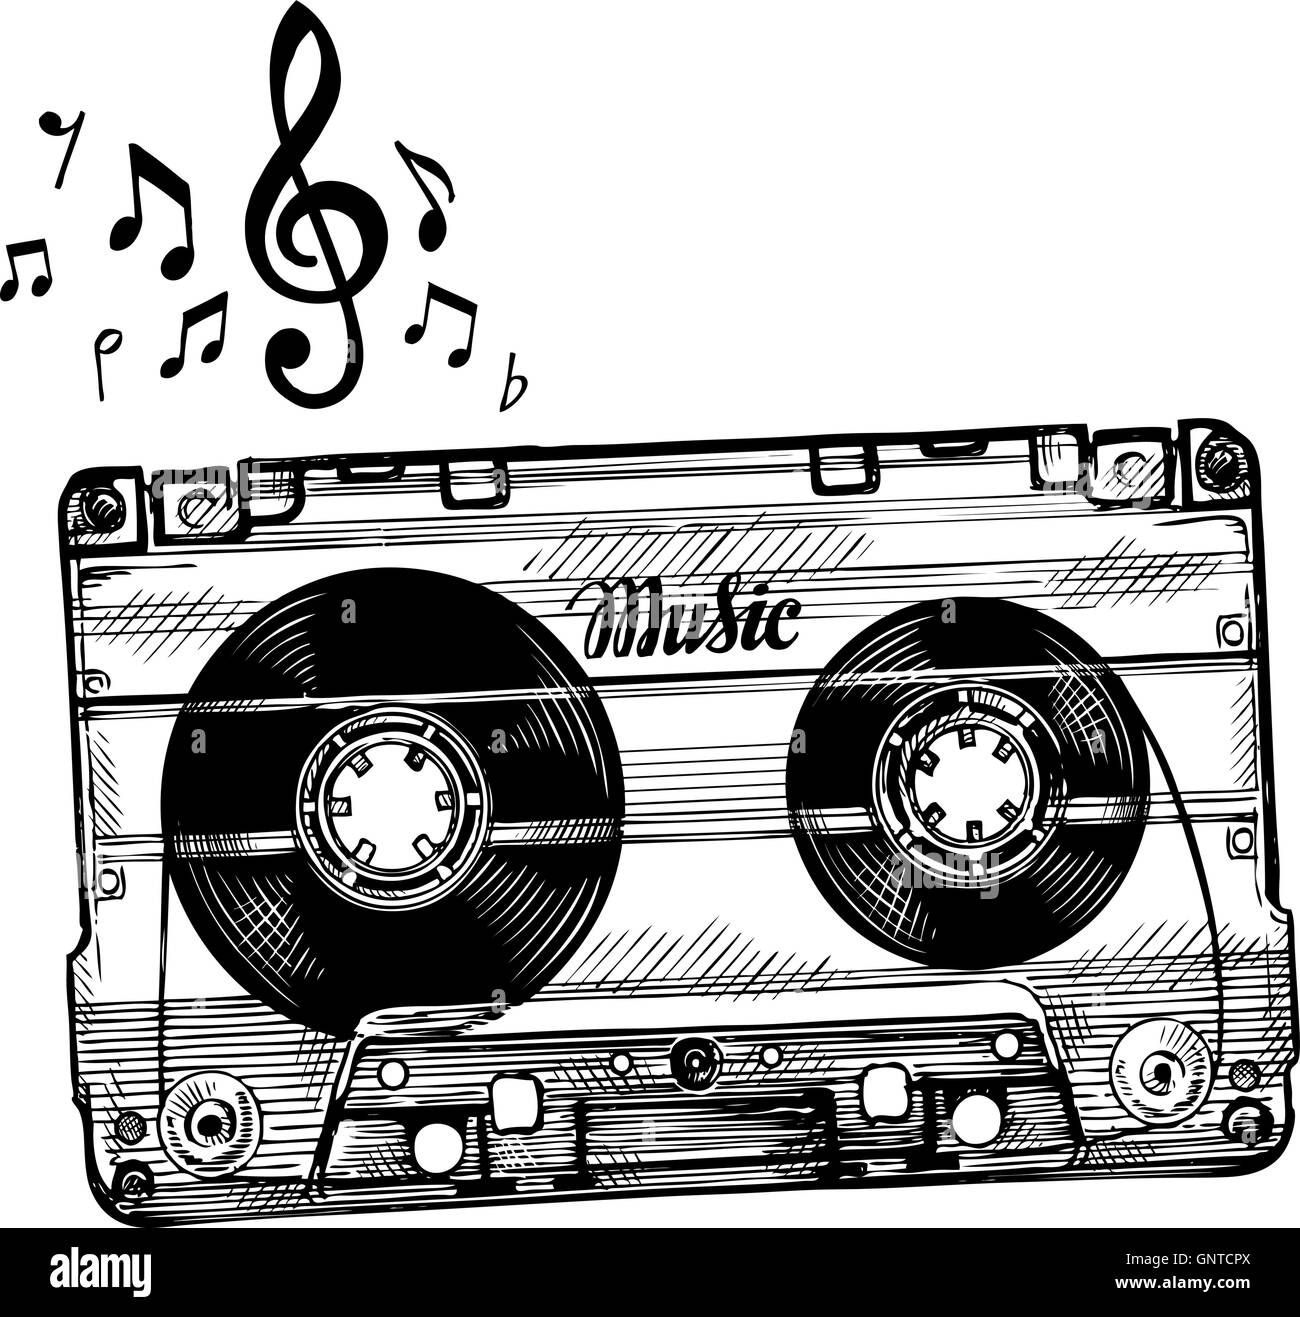 https://c8.alamy.com/comp/GNTCPX/hand-drawn-cassette-music-sketch-audio-tape-vector-illustration-GNTCPX.jpg